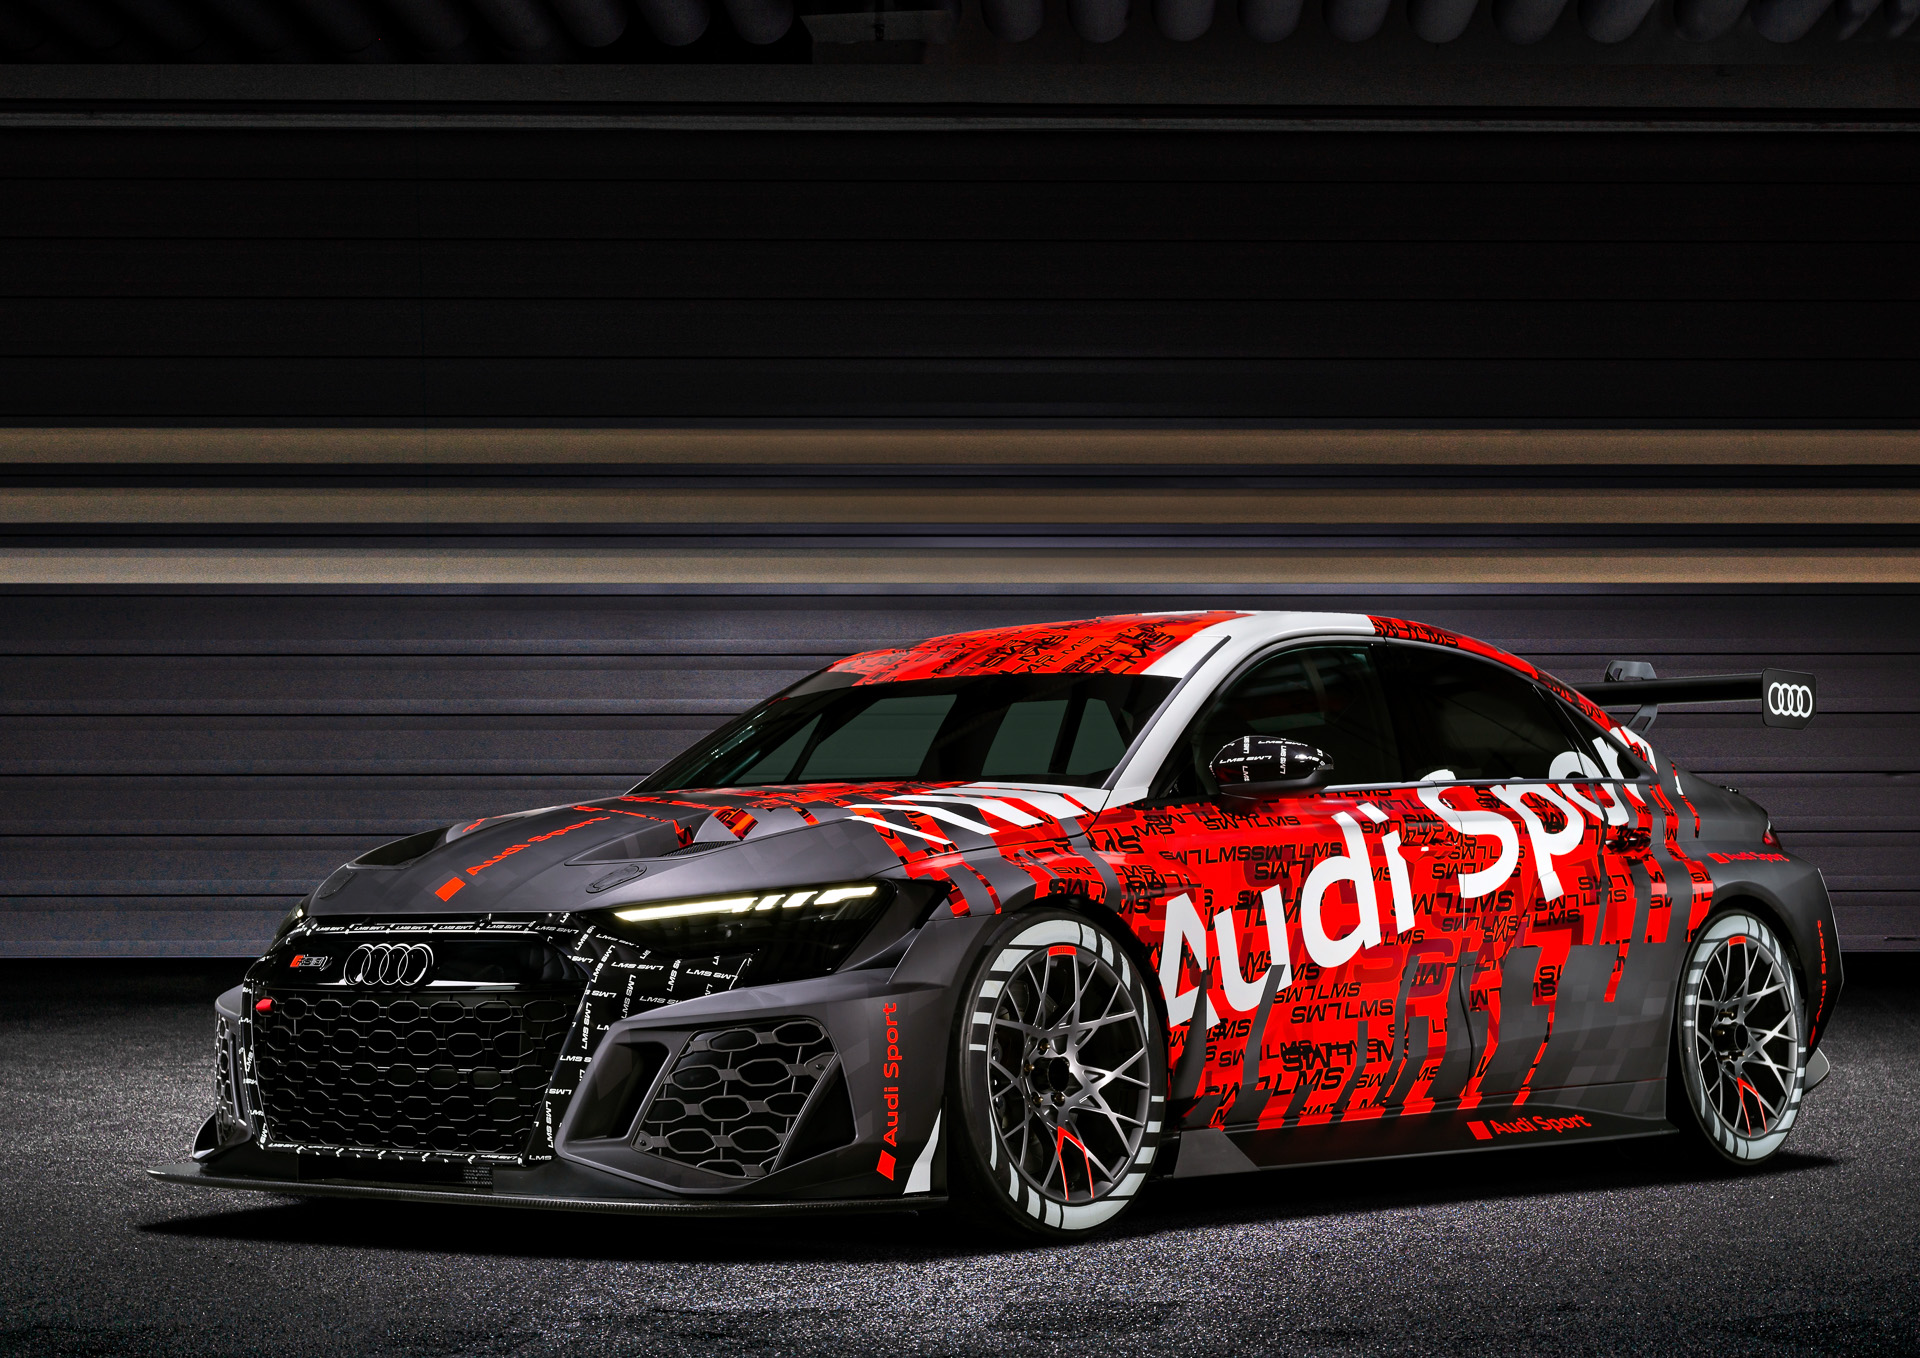 The Ultimate Race Ready Luxury Sedan: The 2017 Audi RS3 LMS